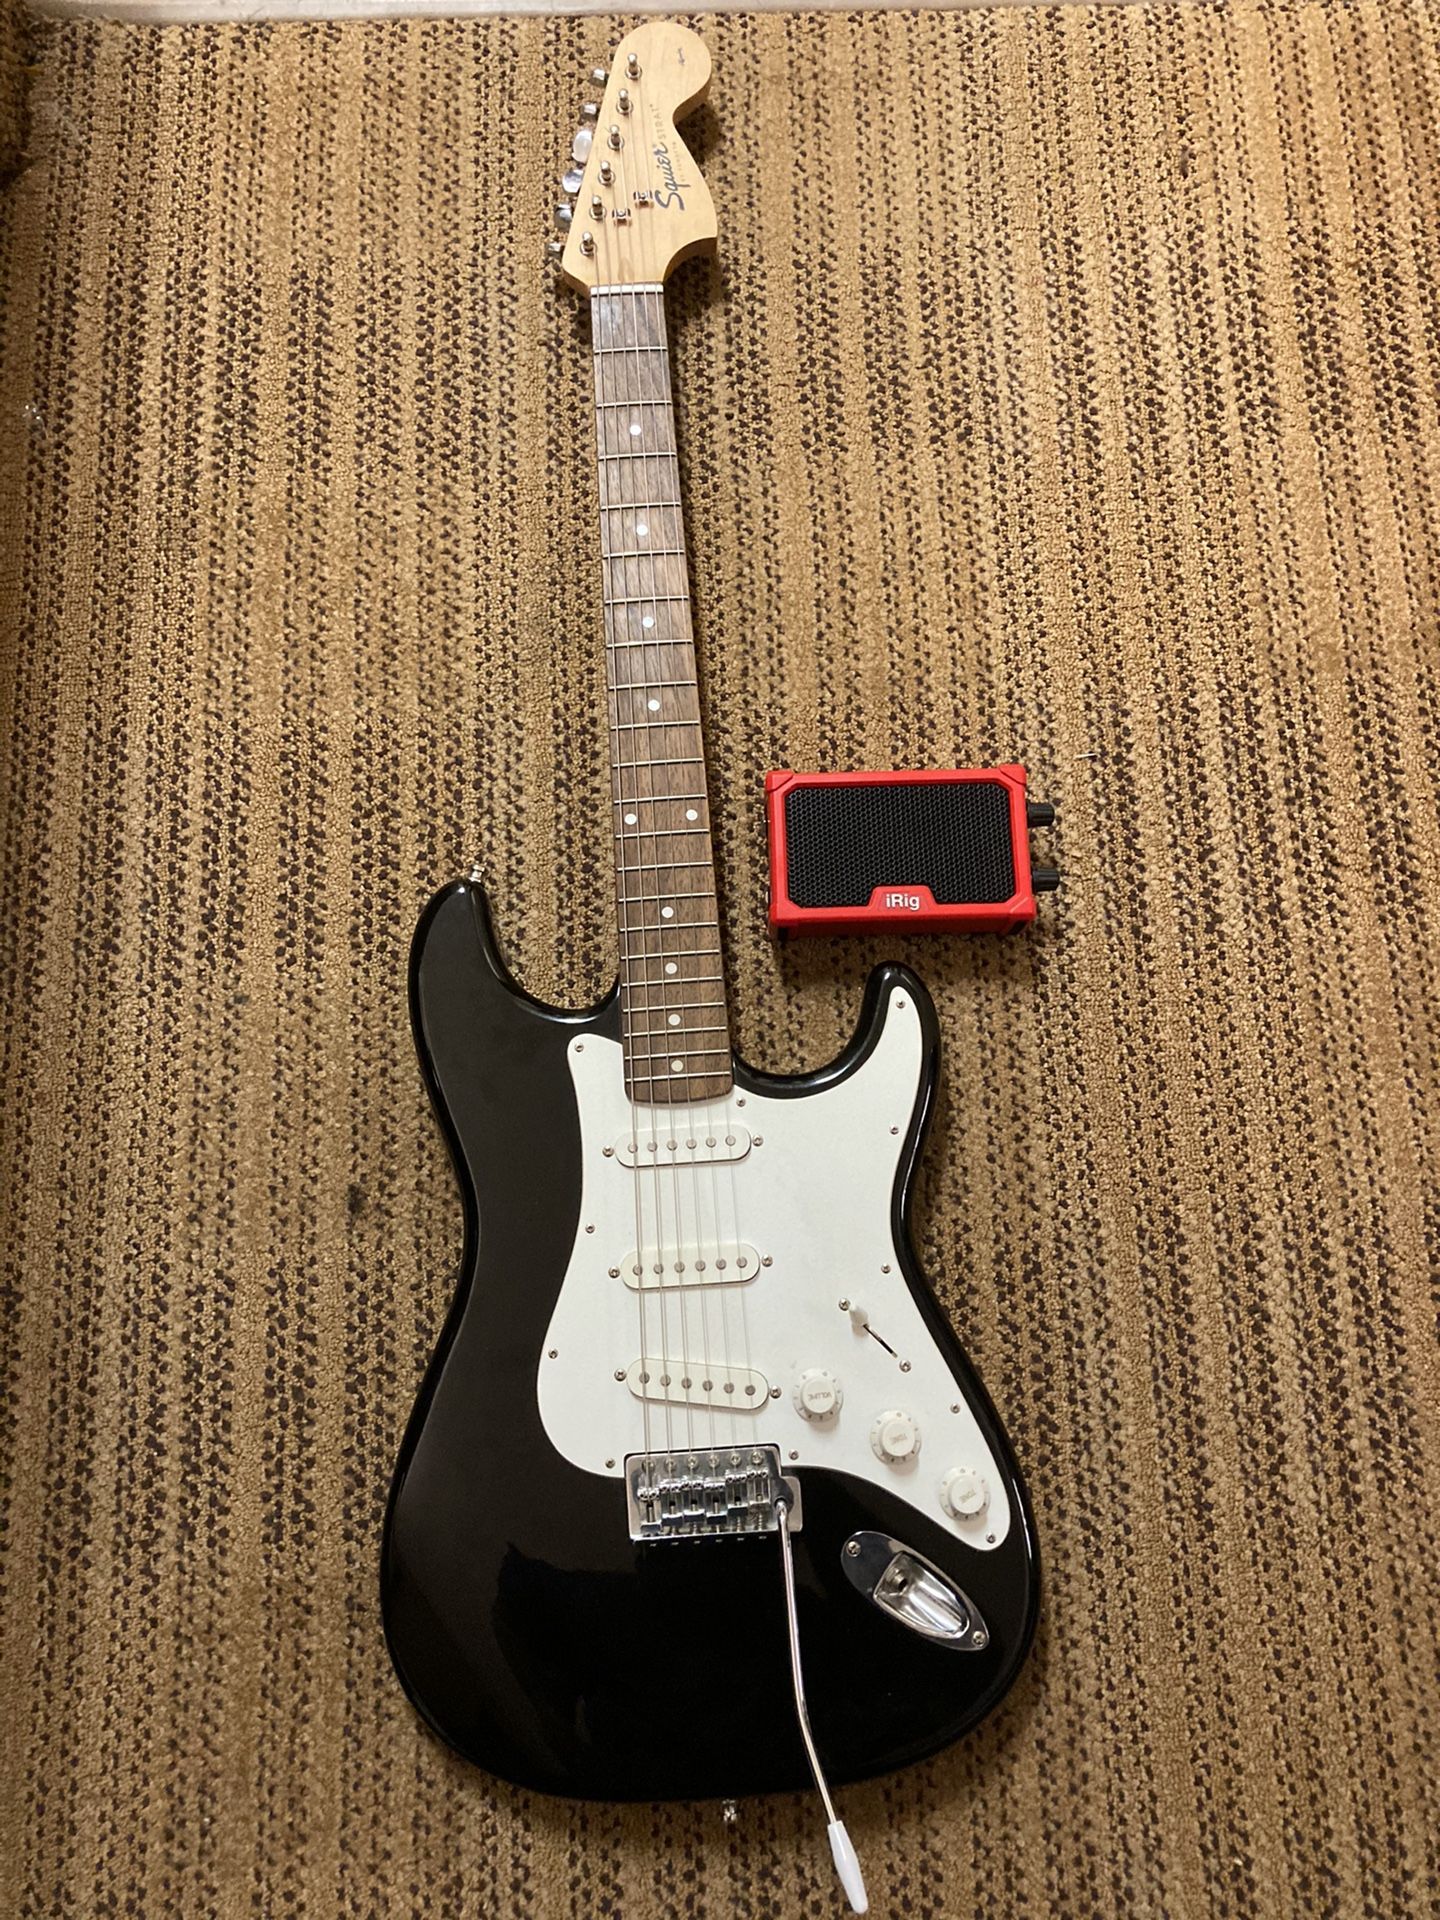 Squier Guitar comes with Nano iRig speaker & guitar chord